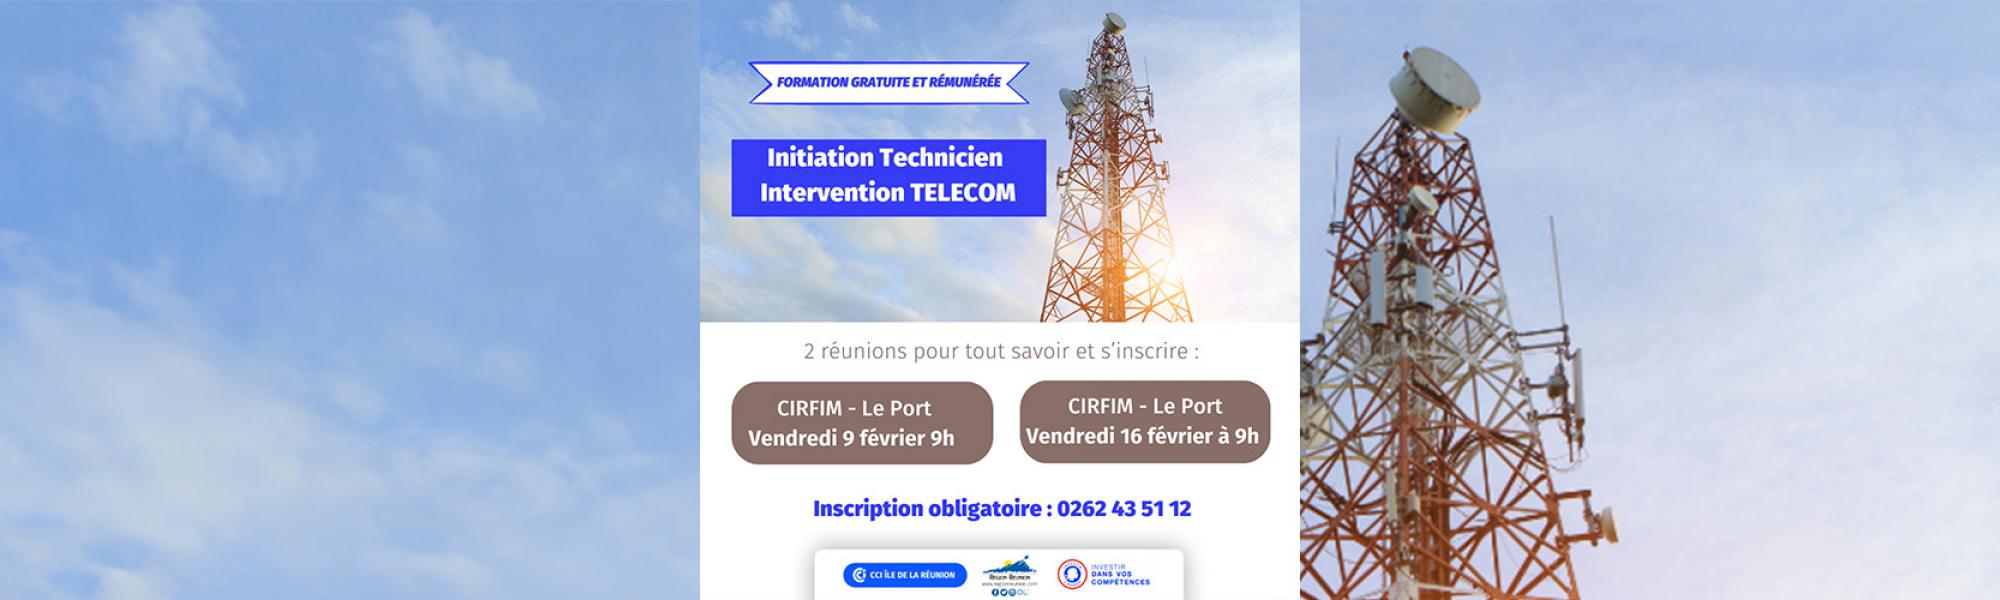 Bandeau Formation Initiation Technicien Intervention TELECOM 